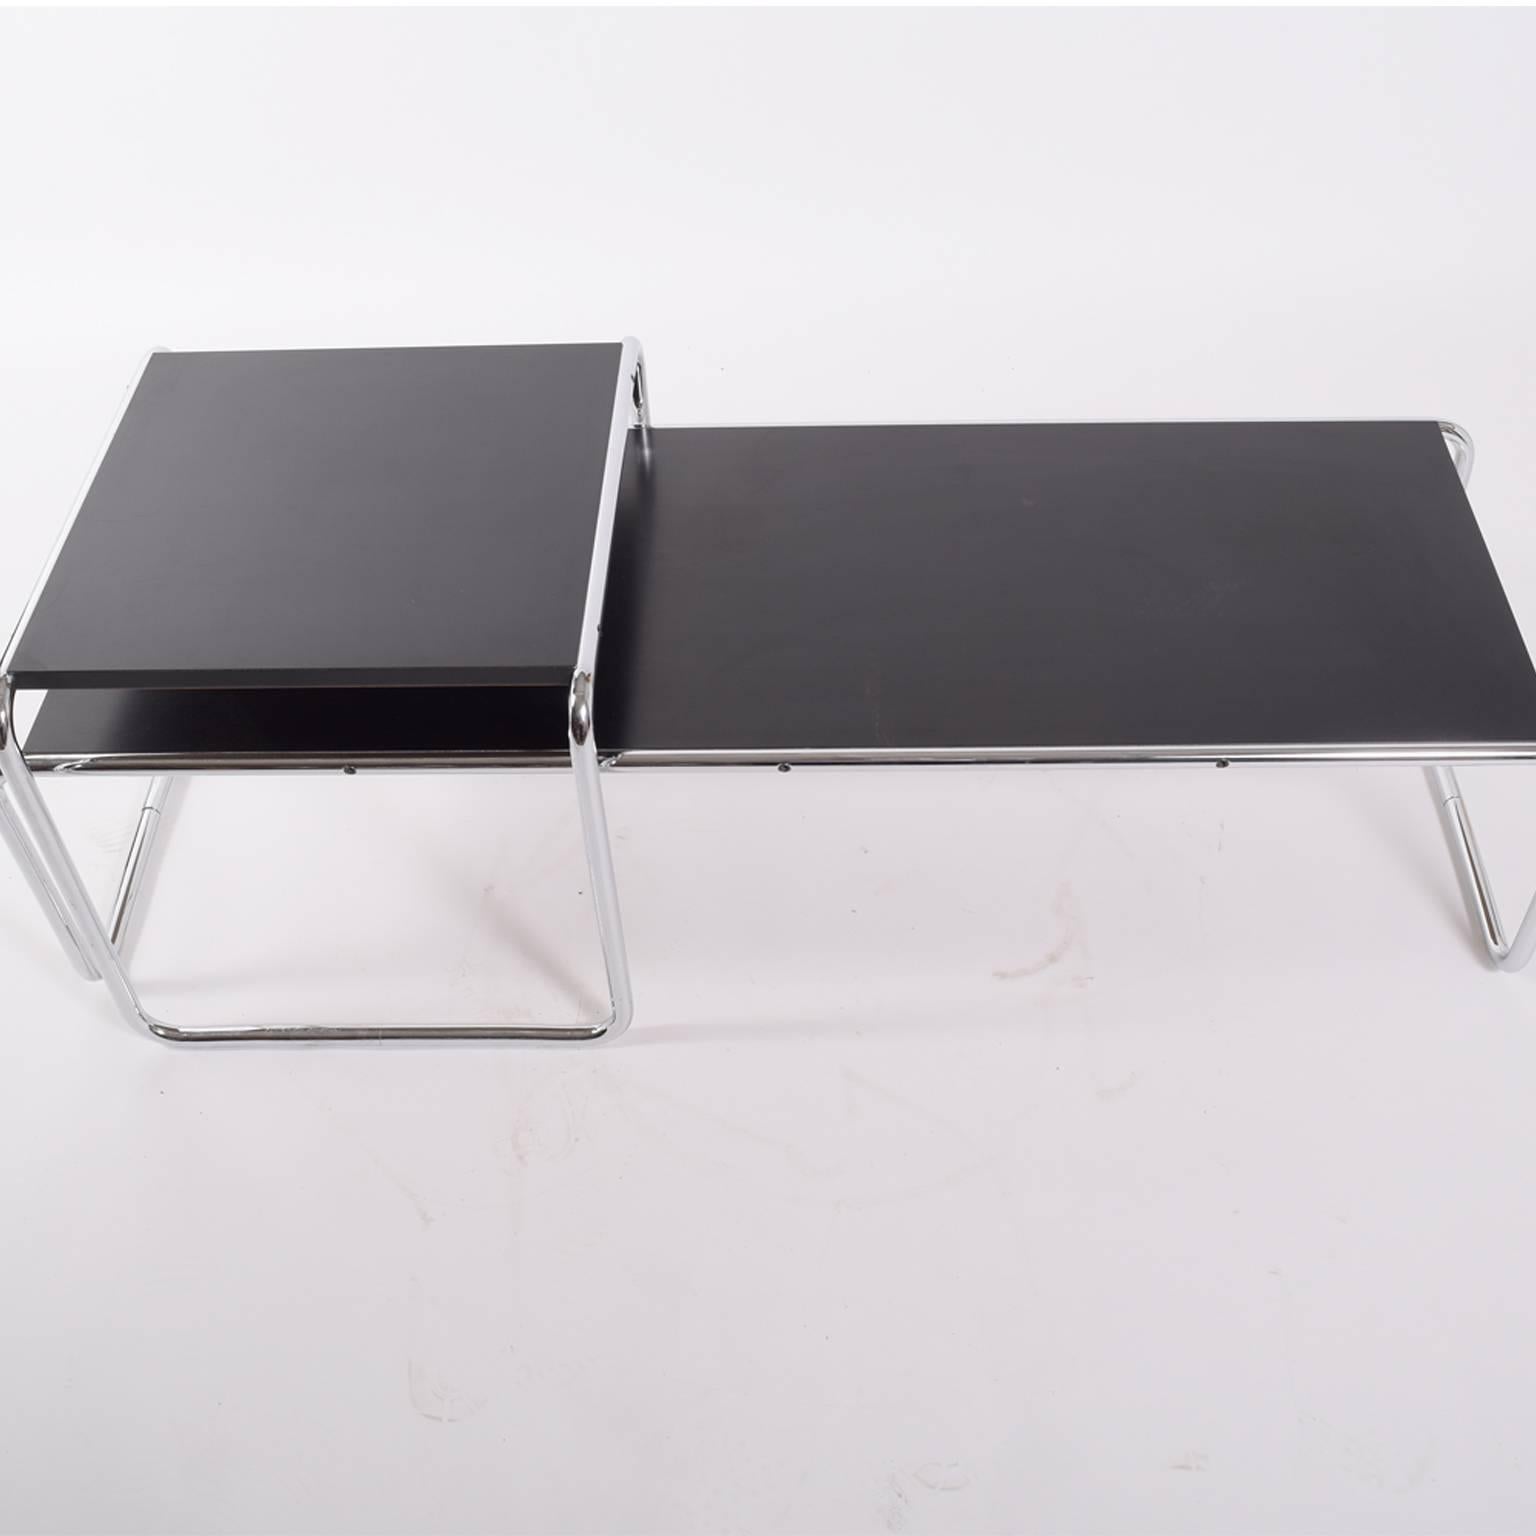 German Laccio Tables Design Marcel Breuer, 1925 for Knoll